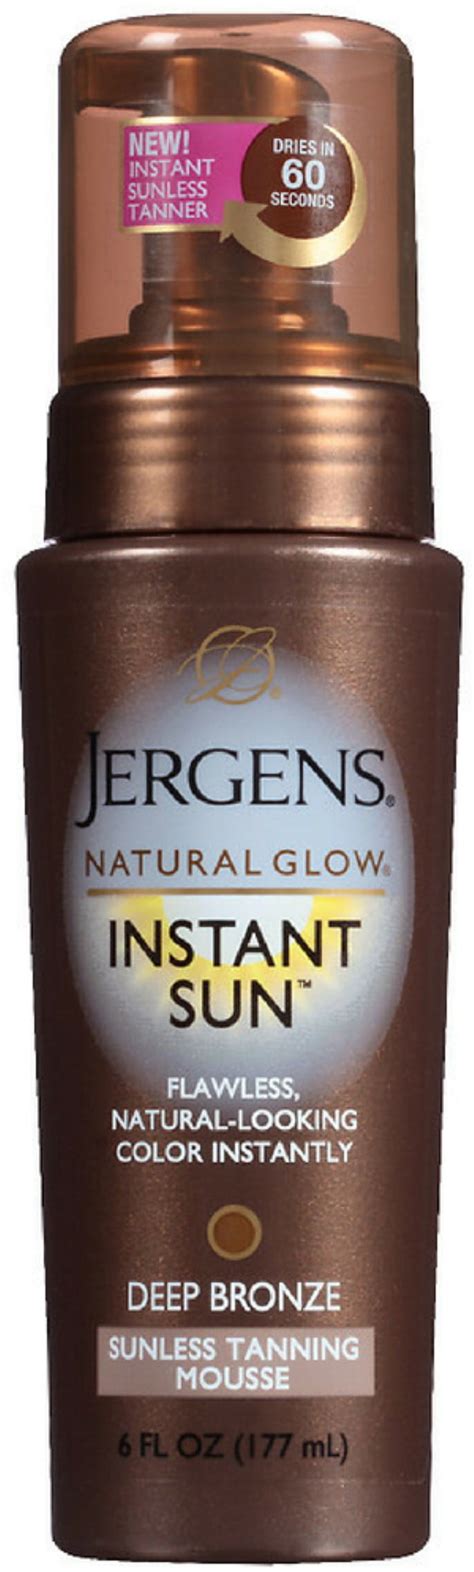 Jergens Natural Glow Instant Sun Sunless Tanning Mousse Deep Bronze 6